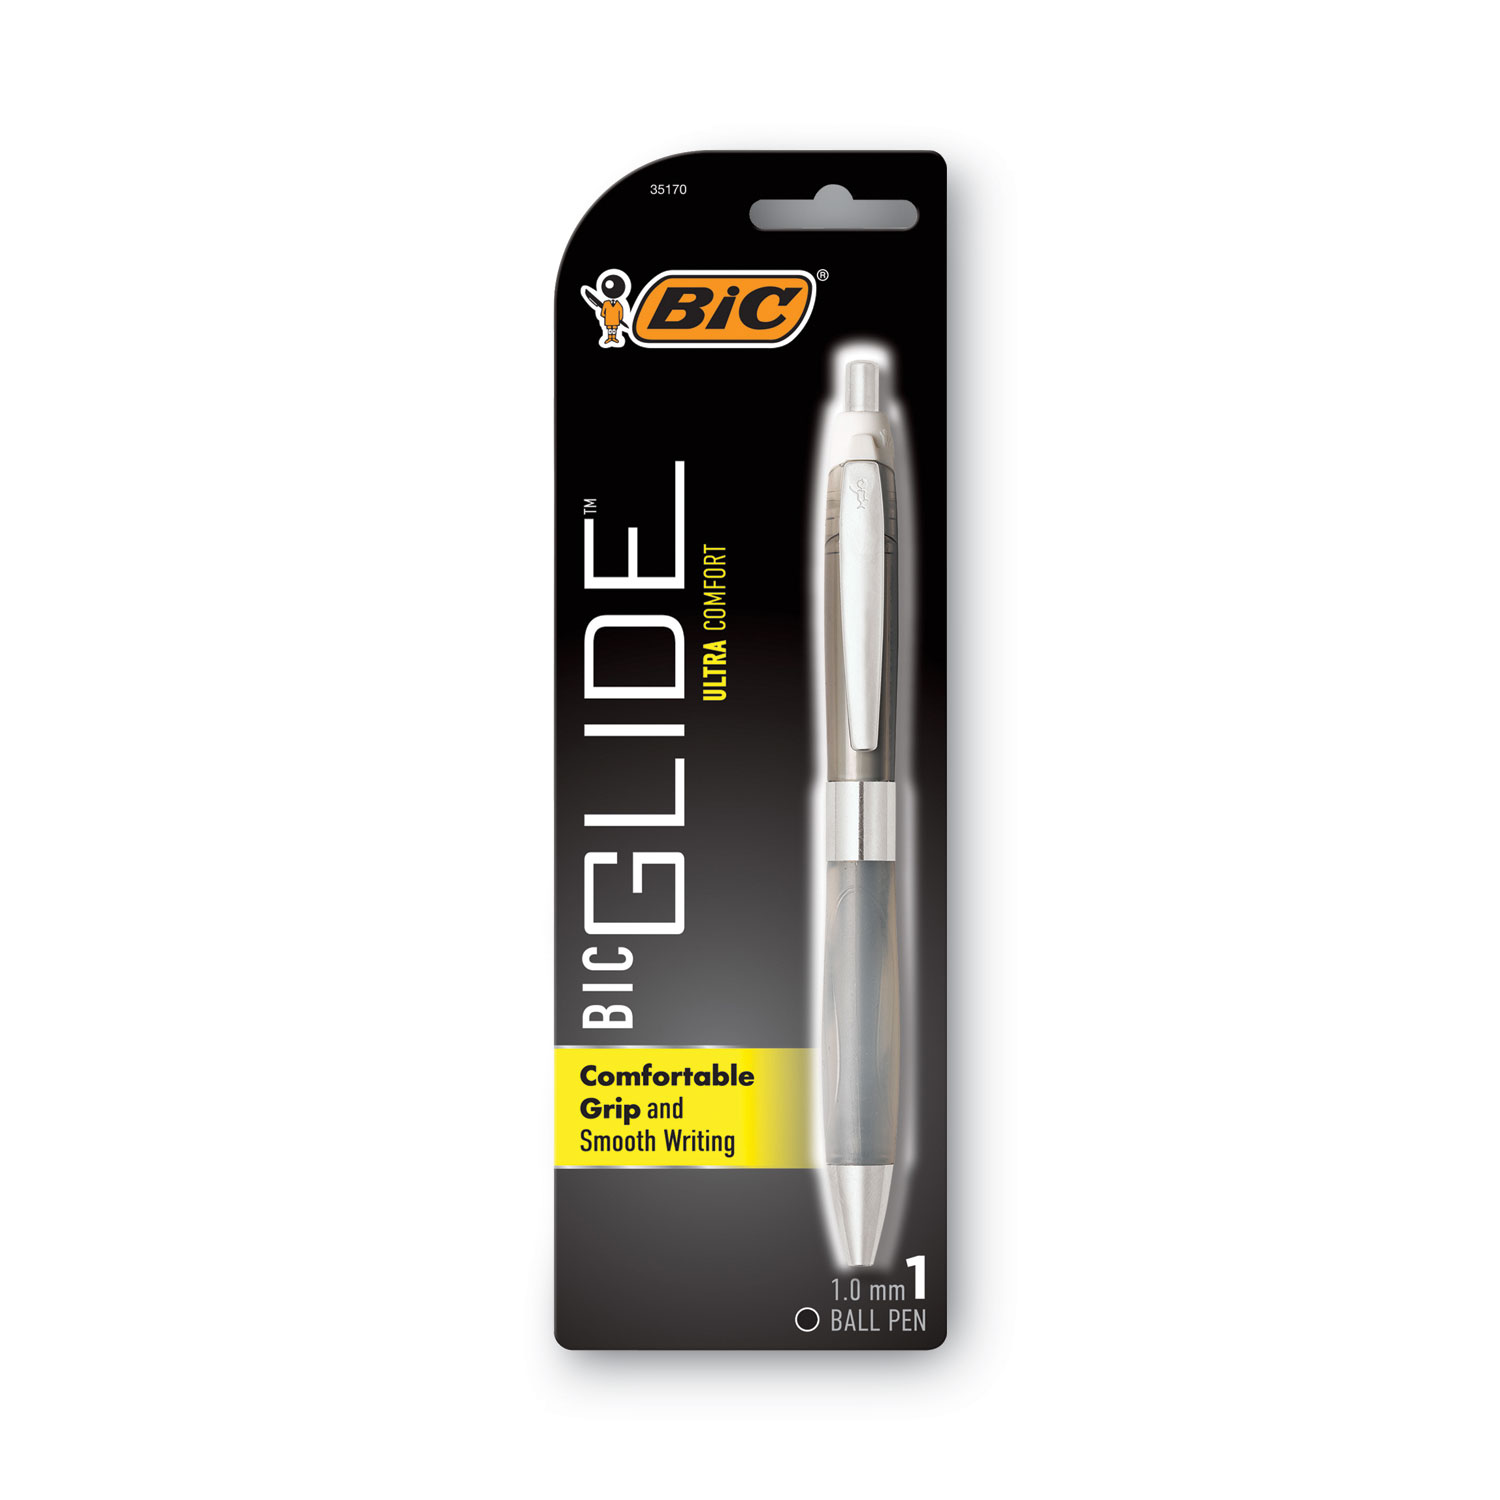 Custom Printed BIC Velocity Bold Ballpoint Pens